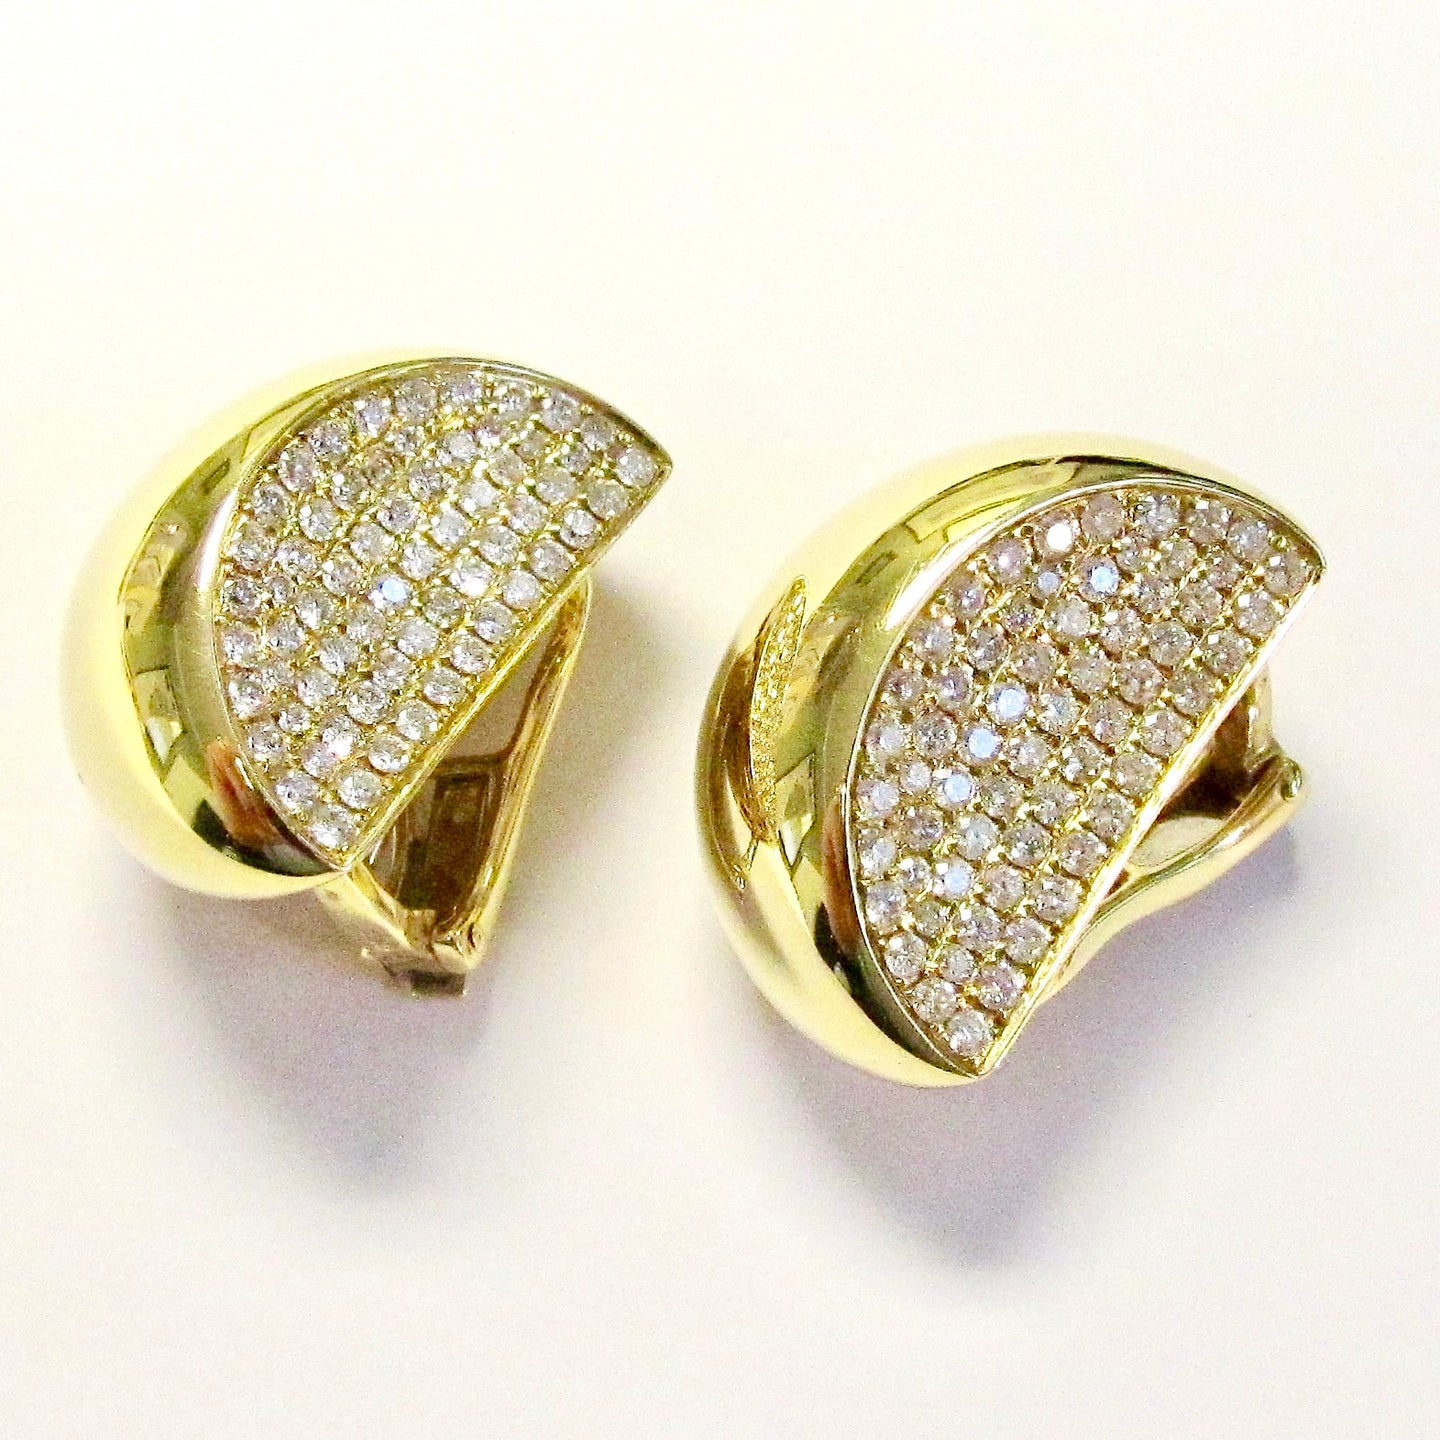 18k Earrings with Diamonds